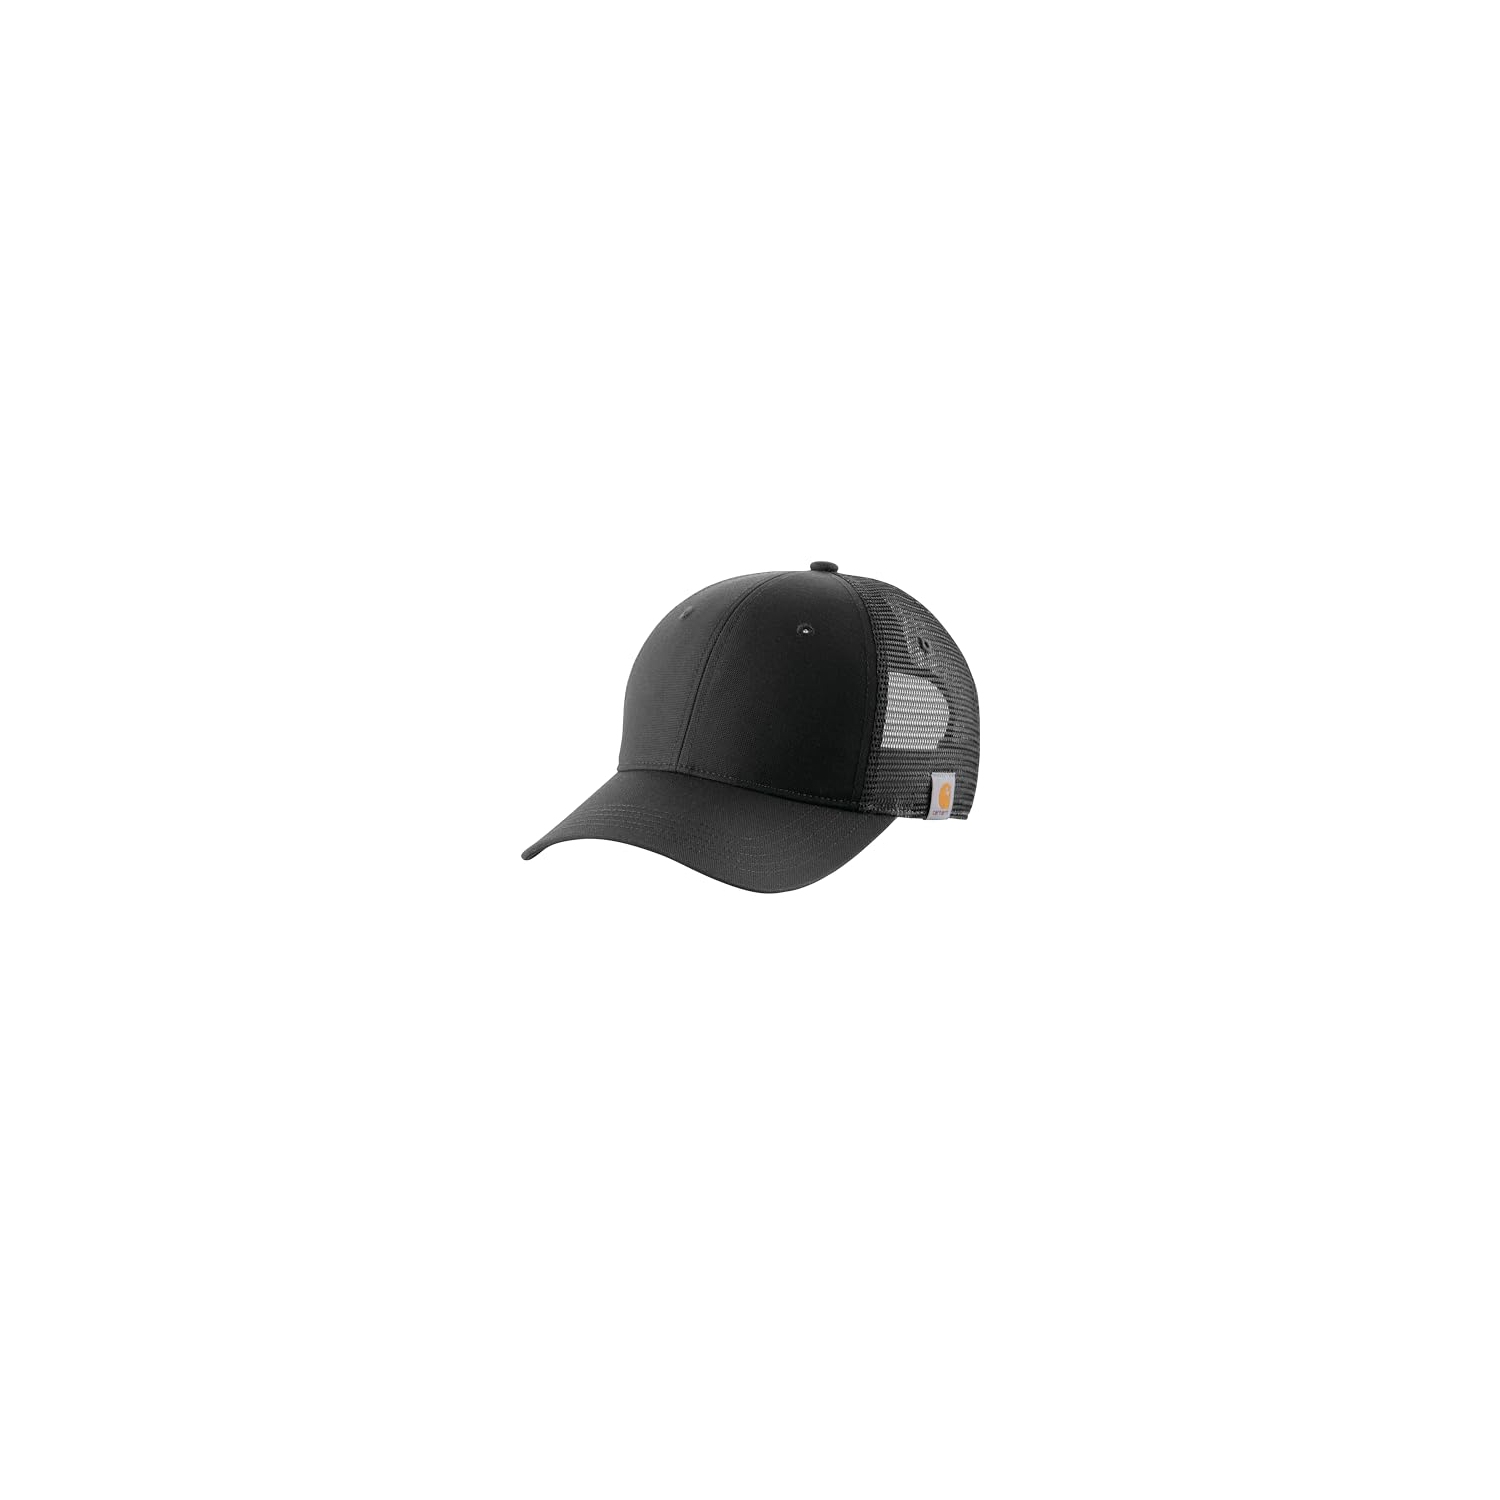 Carhartt Men's Rugged Professional™ Series Canvas Mesh-Back Cap, Black, One Size